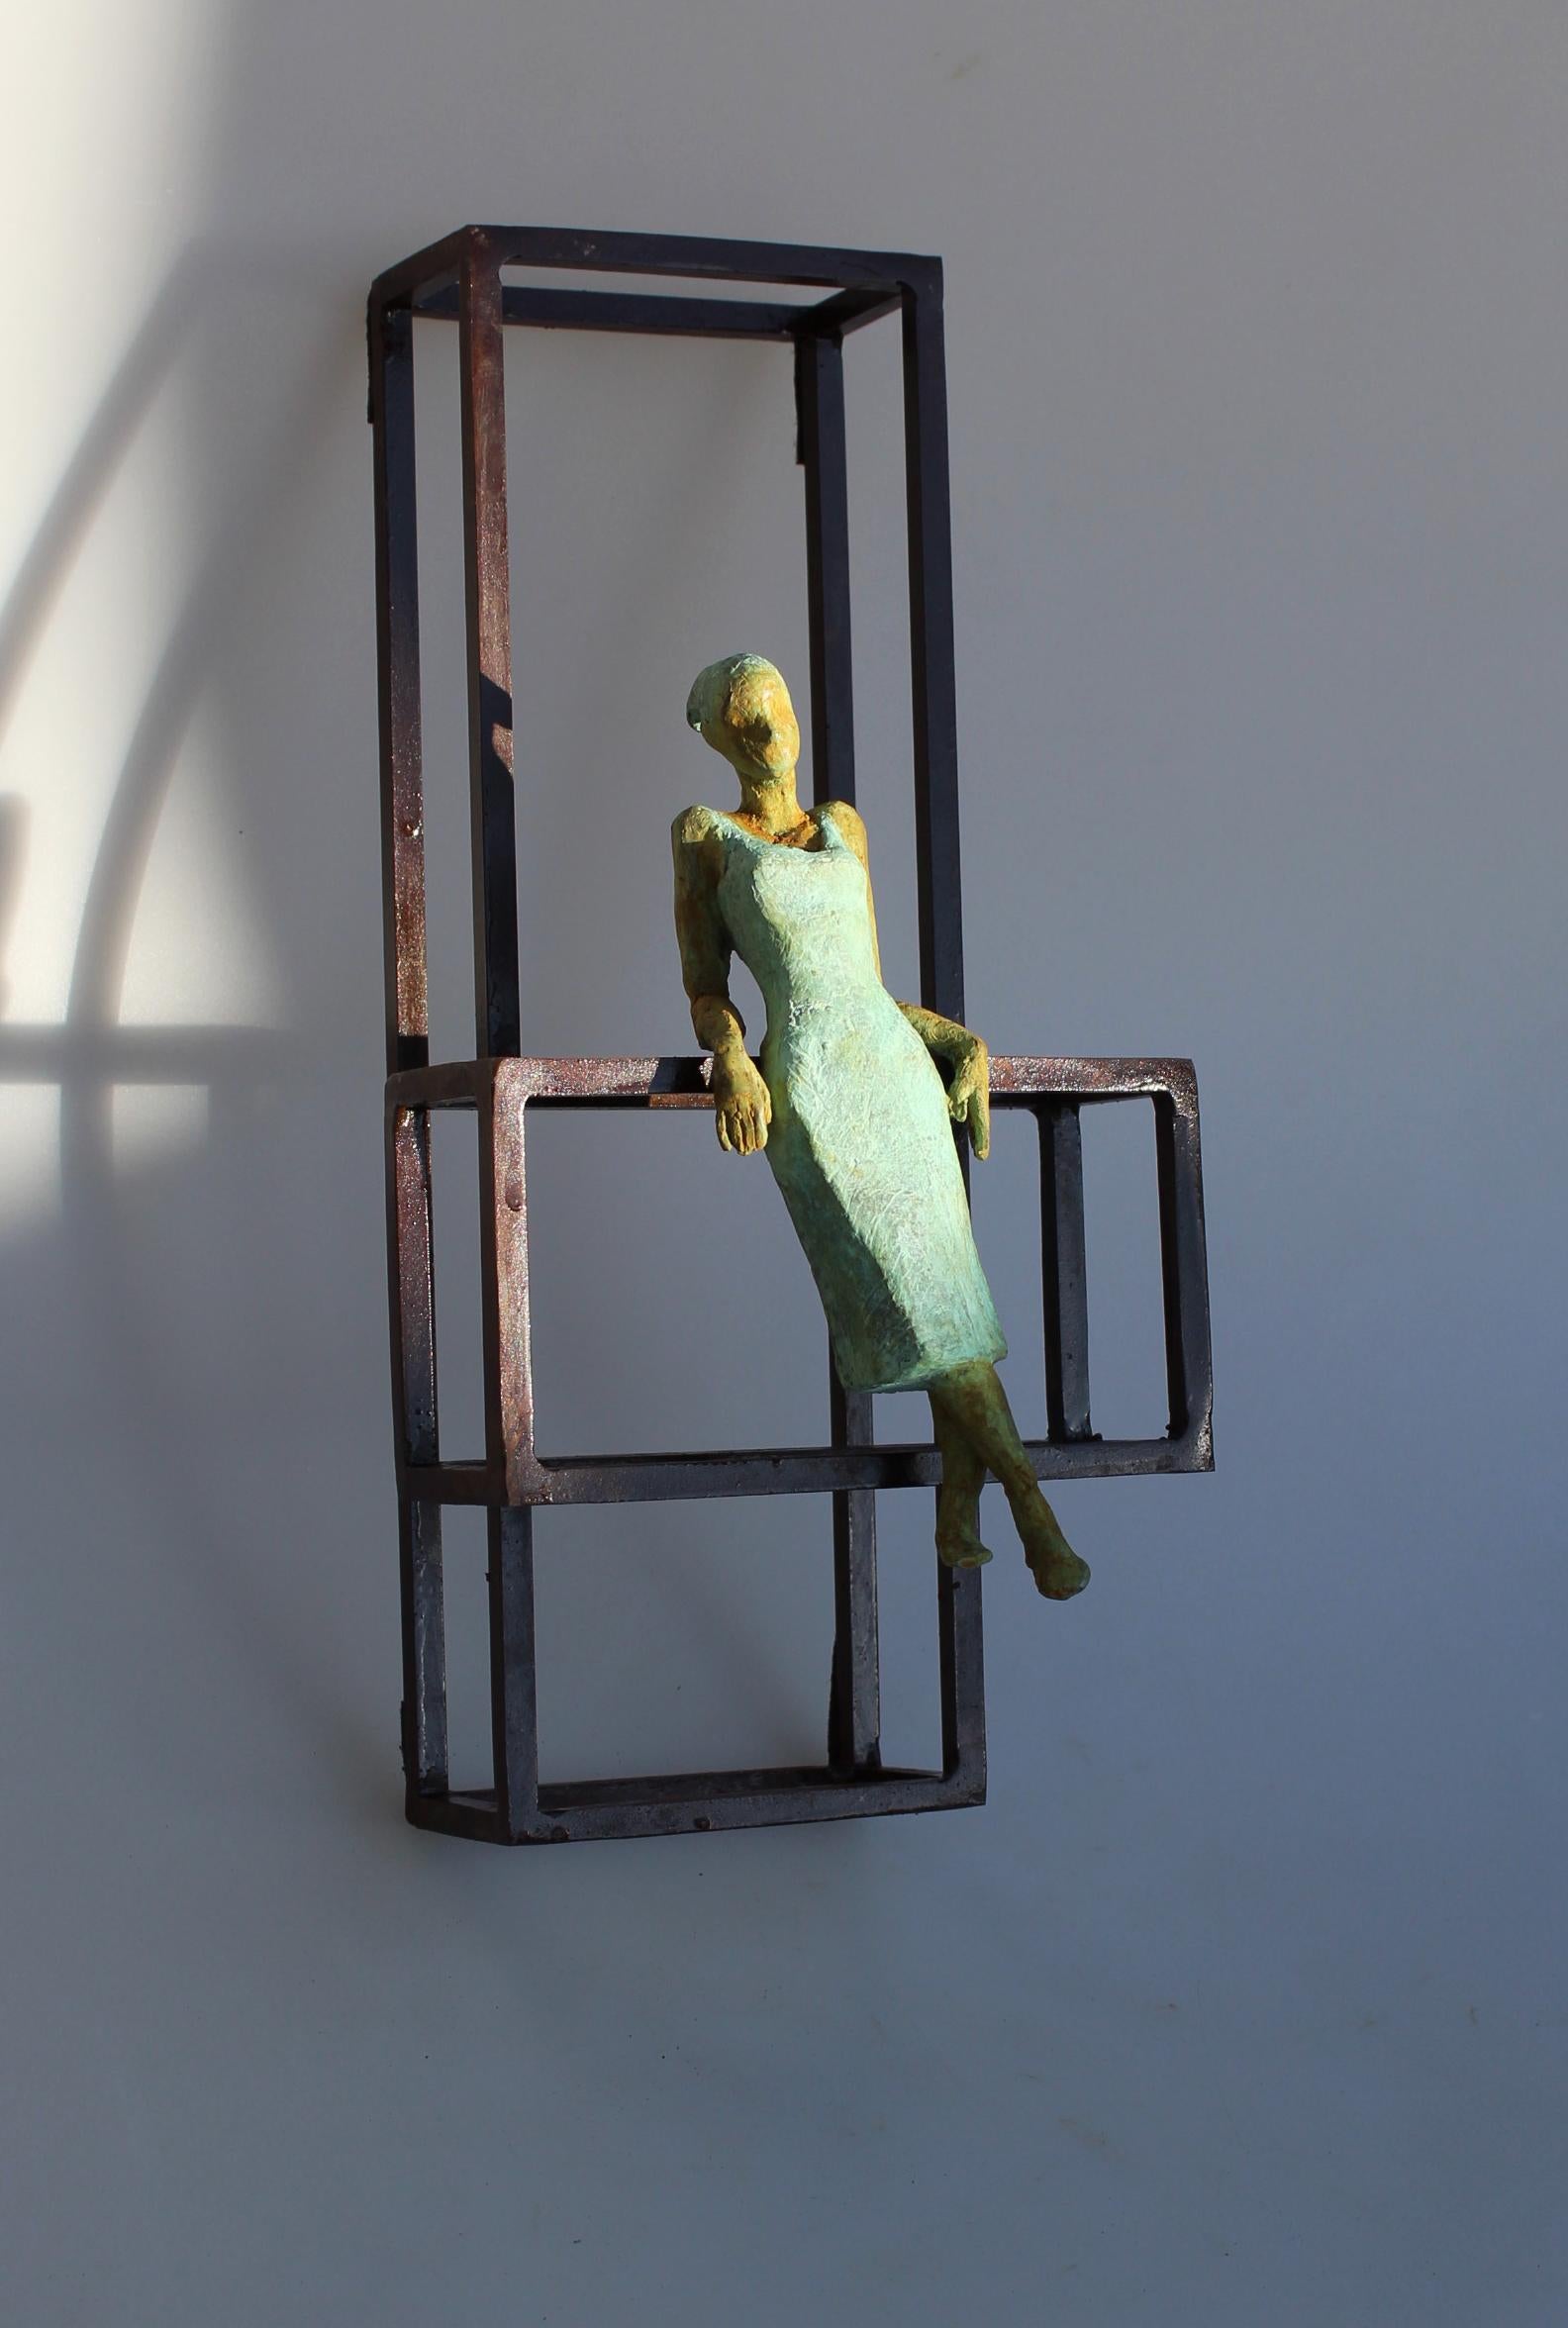 Joan Artigas Planas Figurative Sculpture - "Floating" contemporary bronze mural sculpture figurative girl freedom carefree